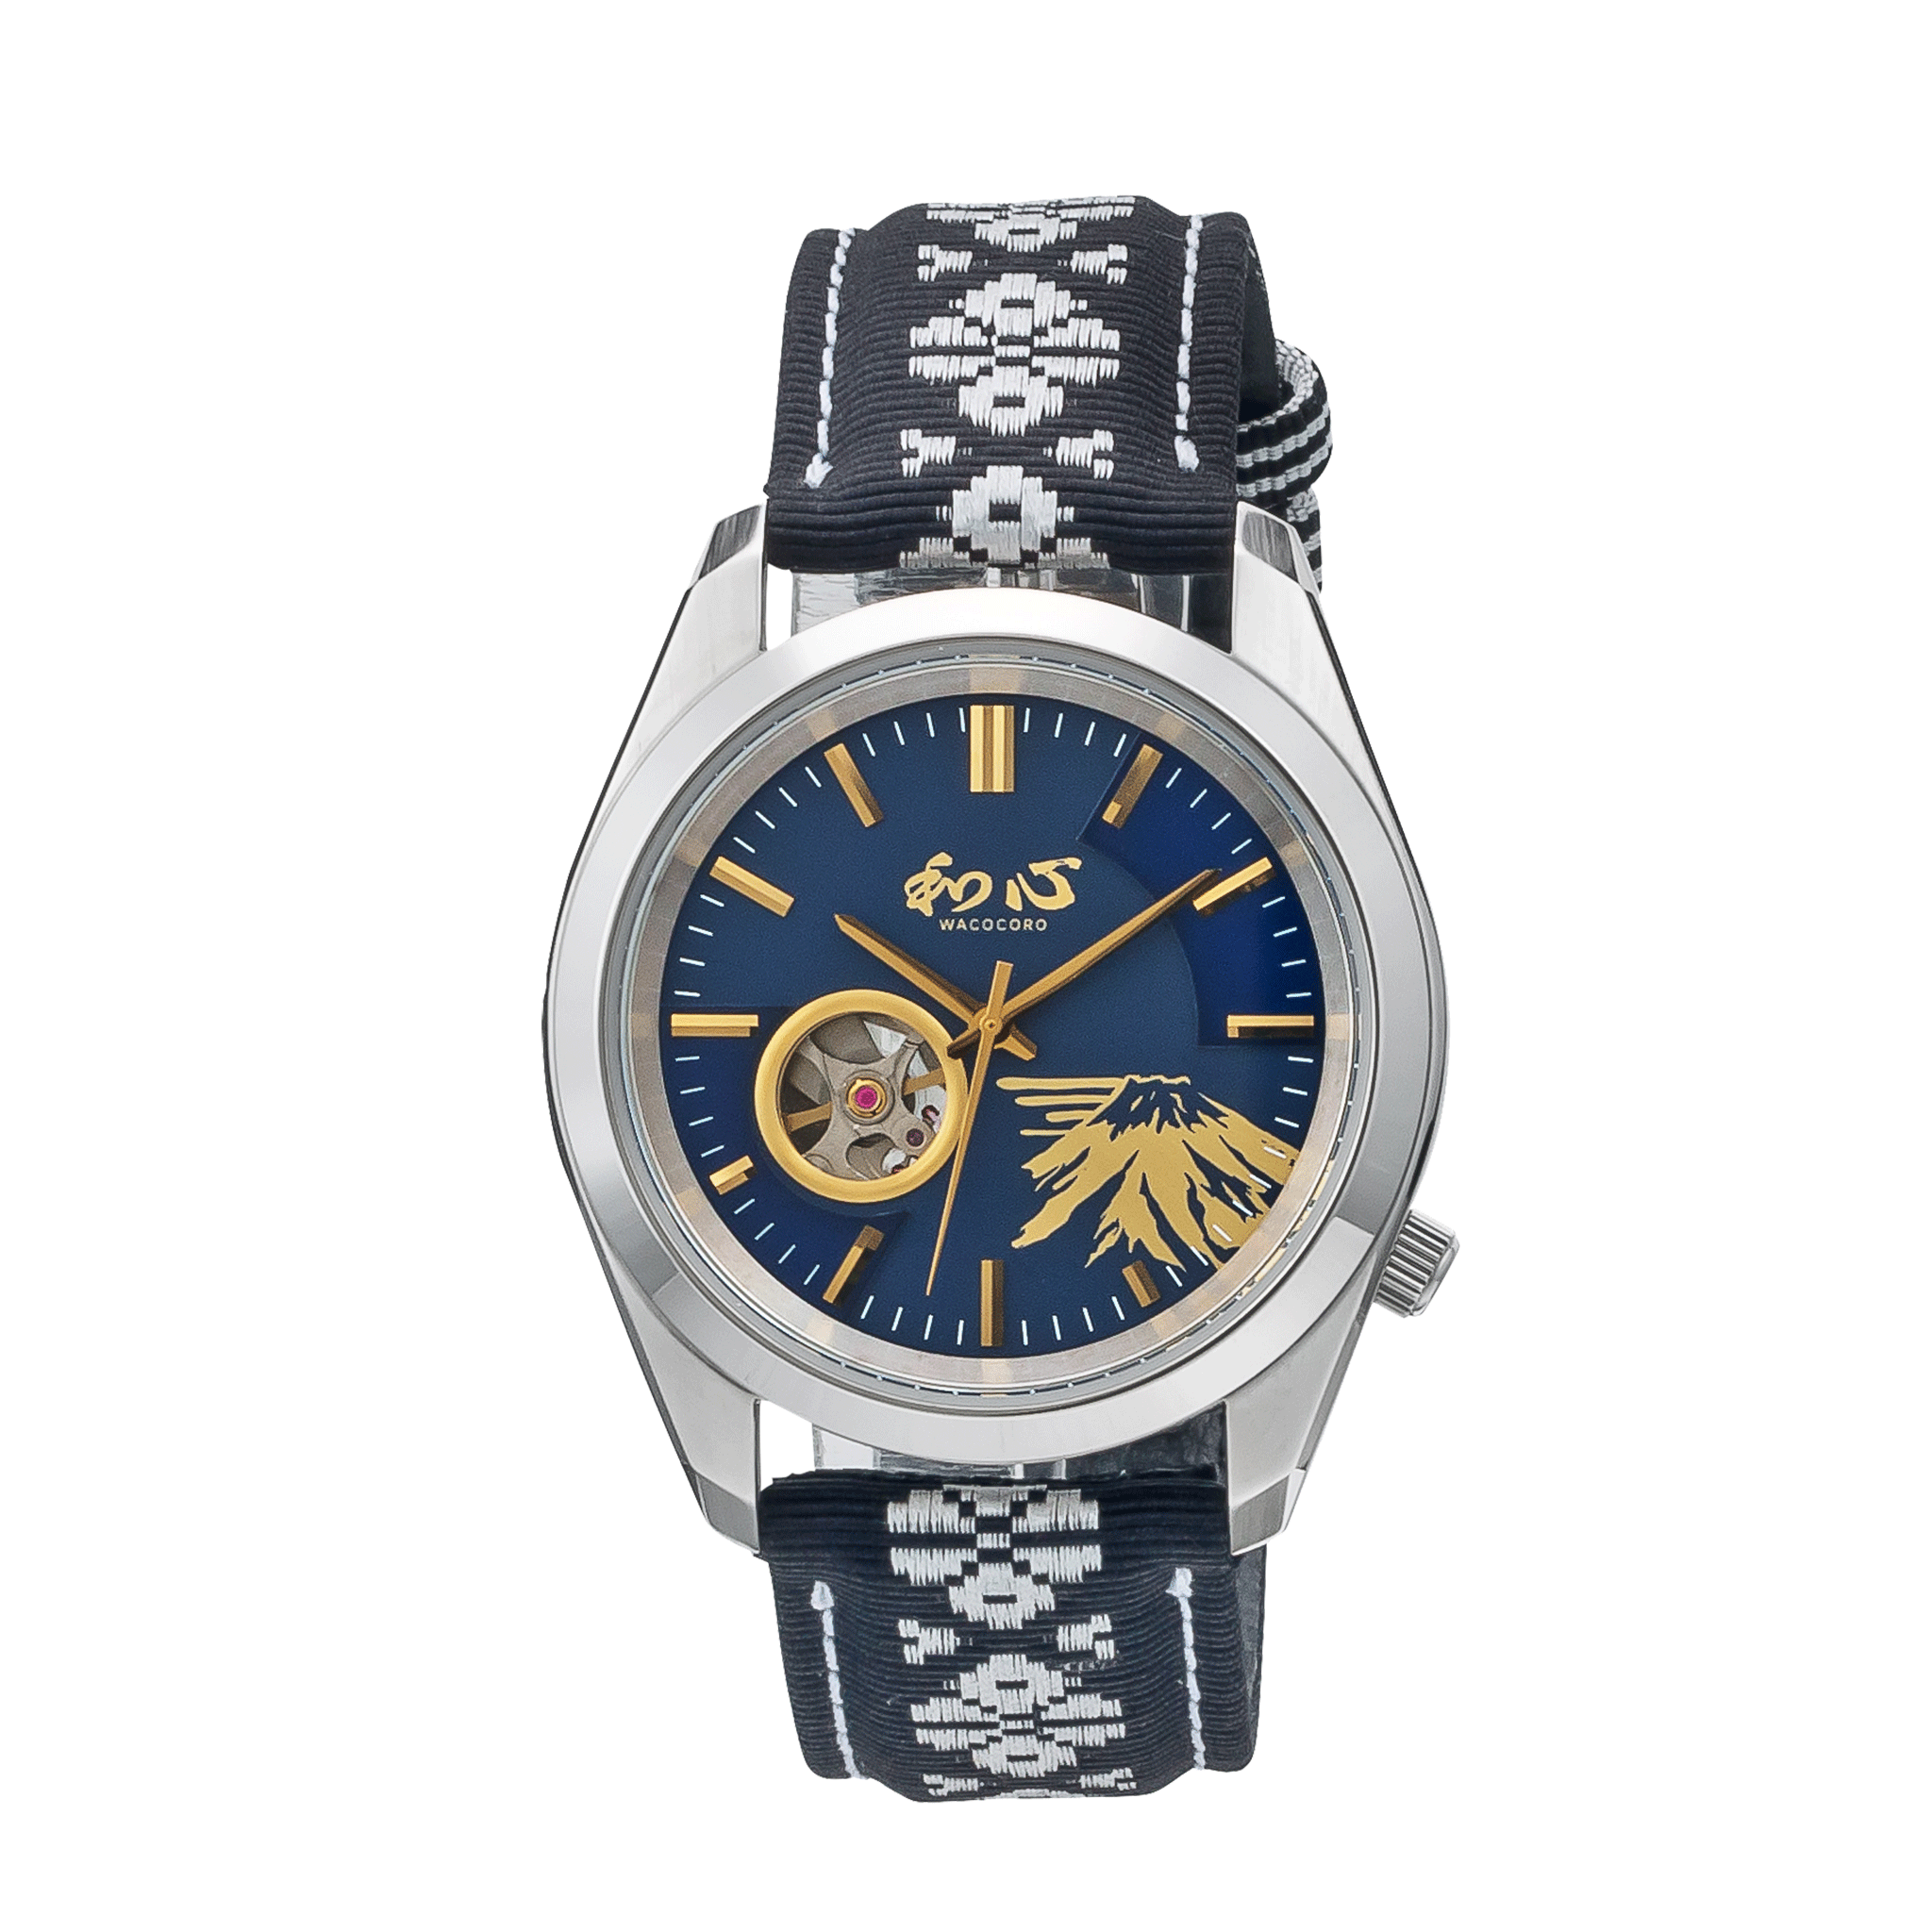 和心 メンズ腕時計 自動巻き式 WA004M-A  博多織 【日本製 新品】腕時計